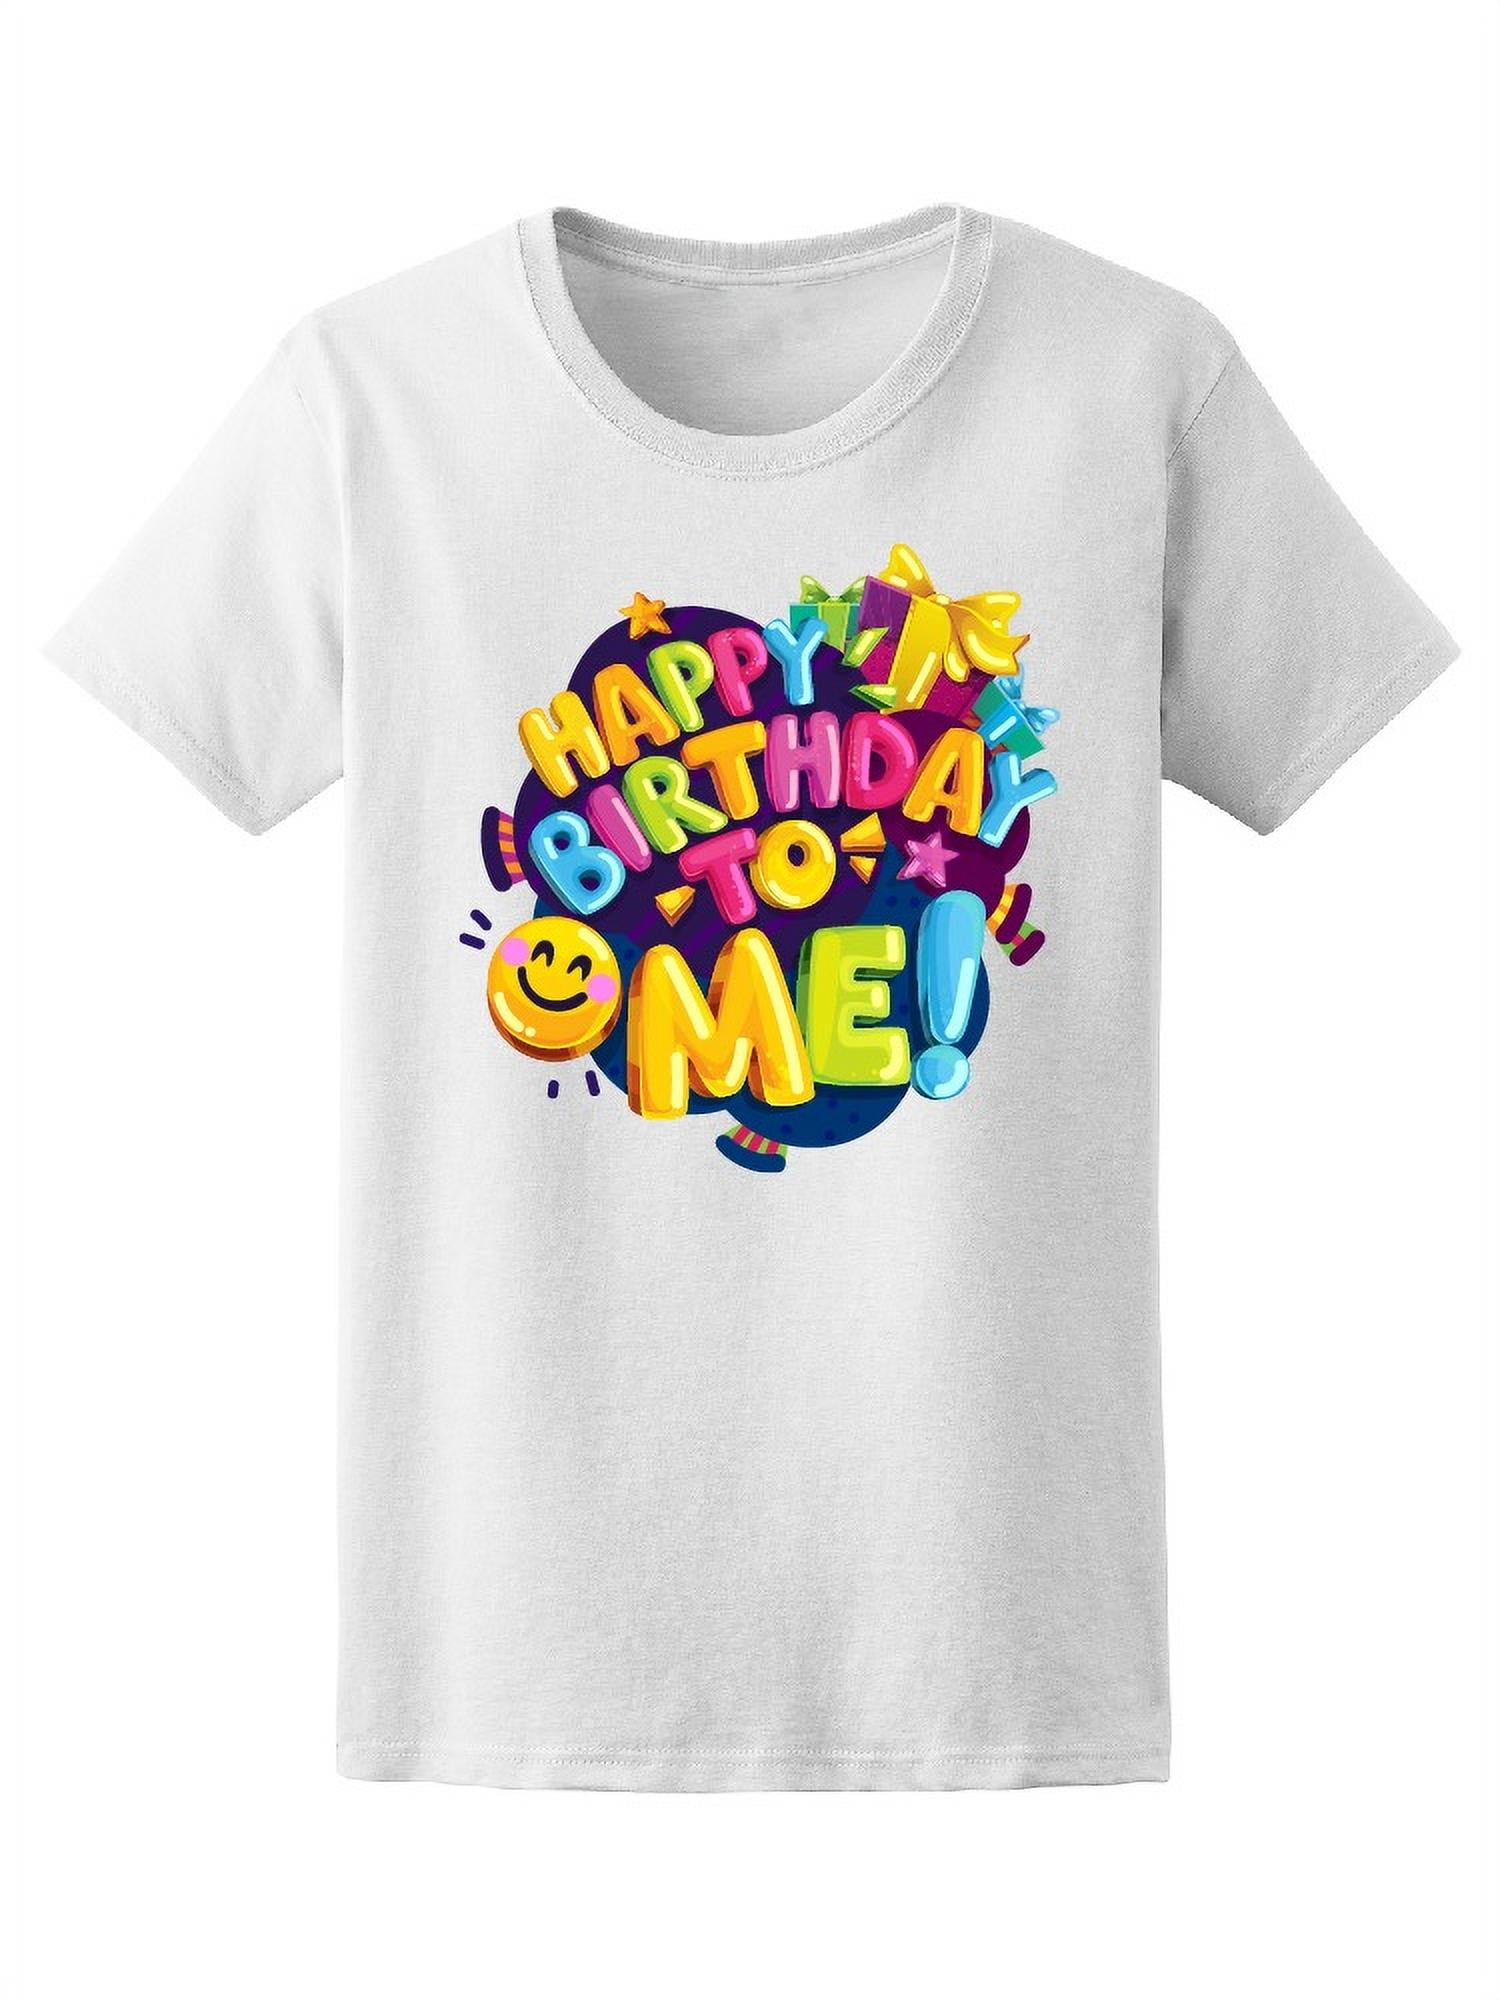 Matching Birthday Shirt Family Match Birthday Shirt Family Birthday 2 Sweet Shirt Two Sweet Birthday  Shirt Kid Birthday Shirt